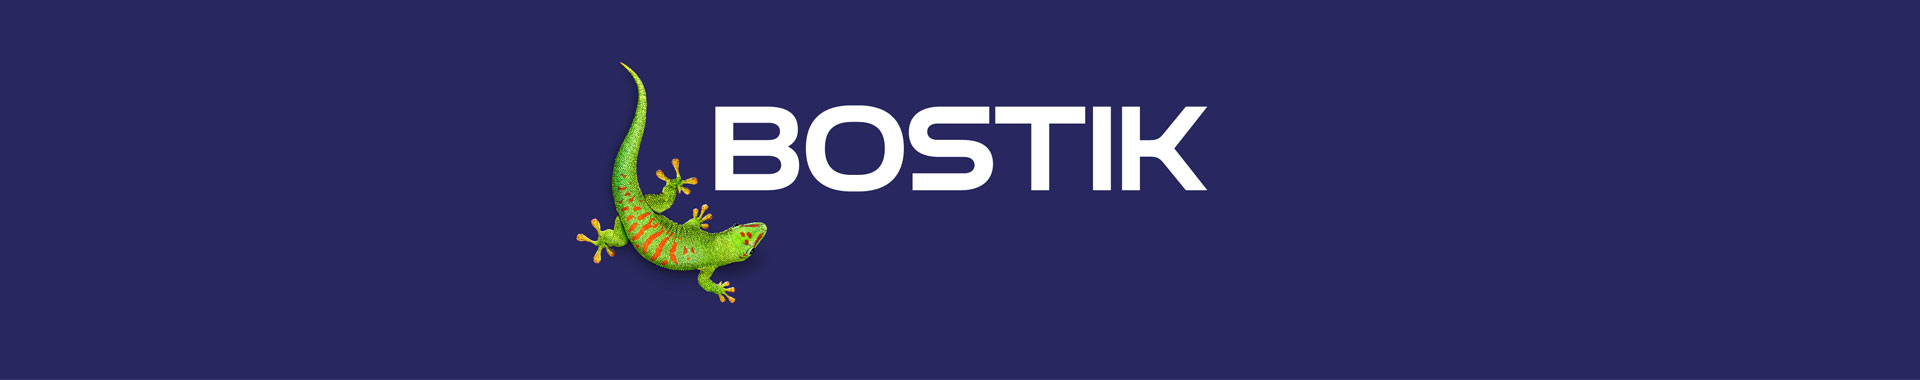 Bostik-DIY-Spacer-1920x380